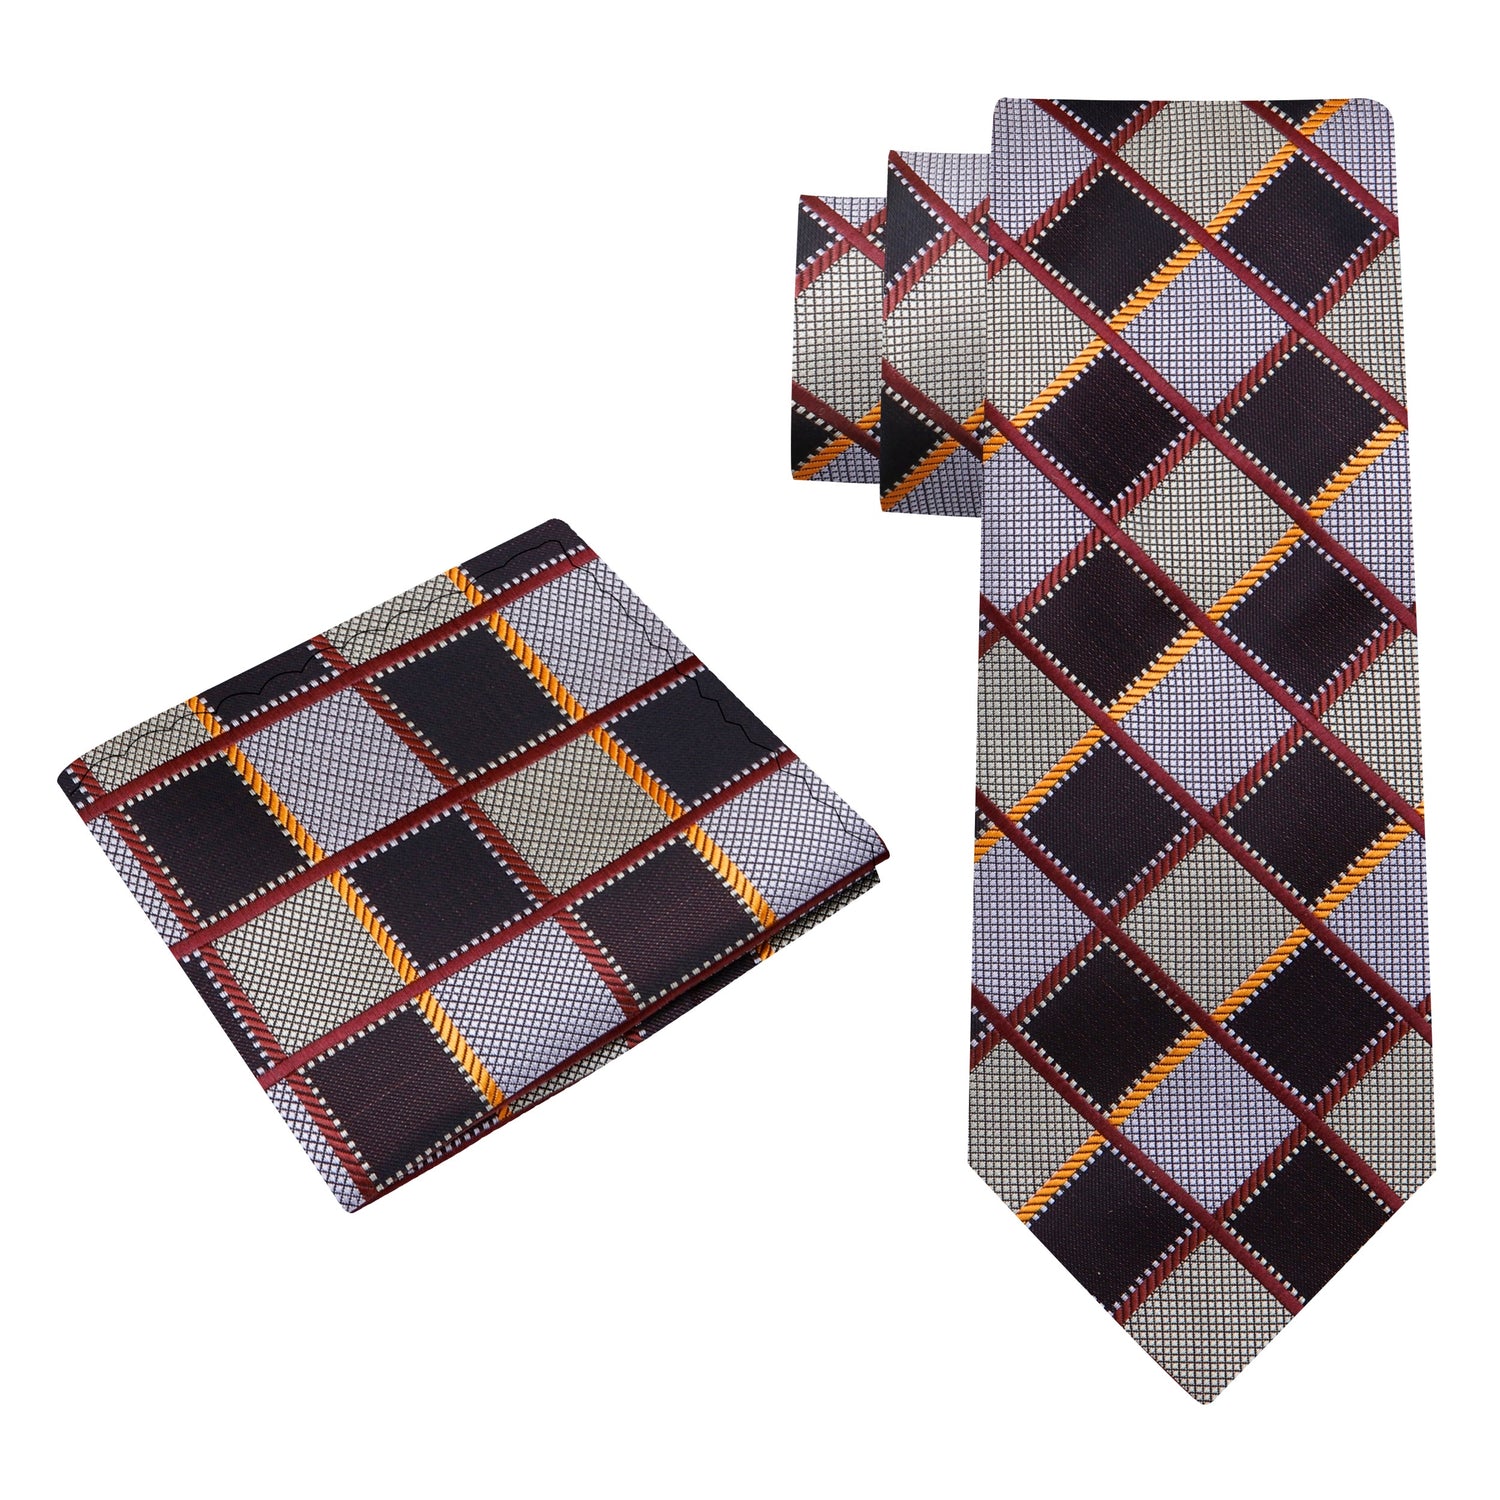 Alt View: A Brown, Light Brown, Gold Geometric Diamond Pattern Silk Necktie, Matching Pocket Square